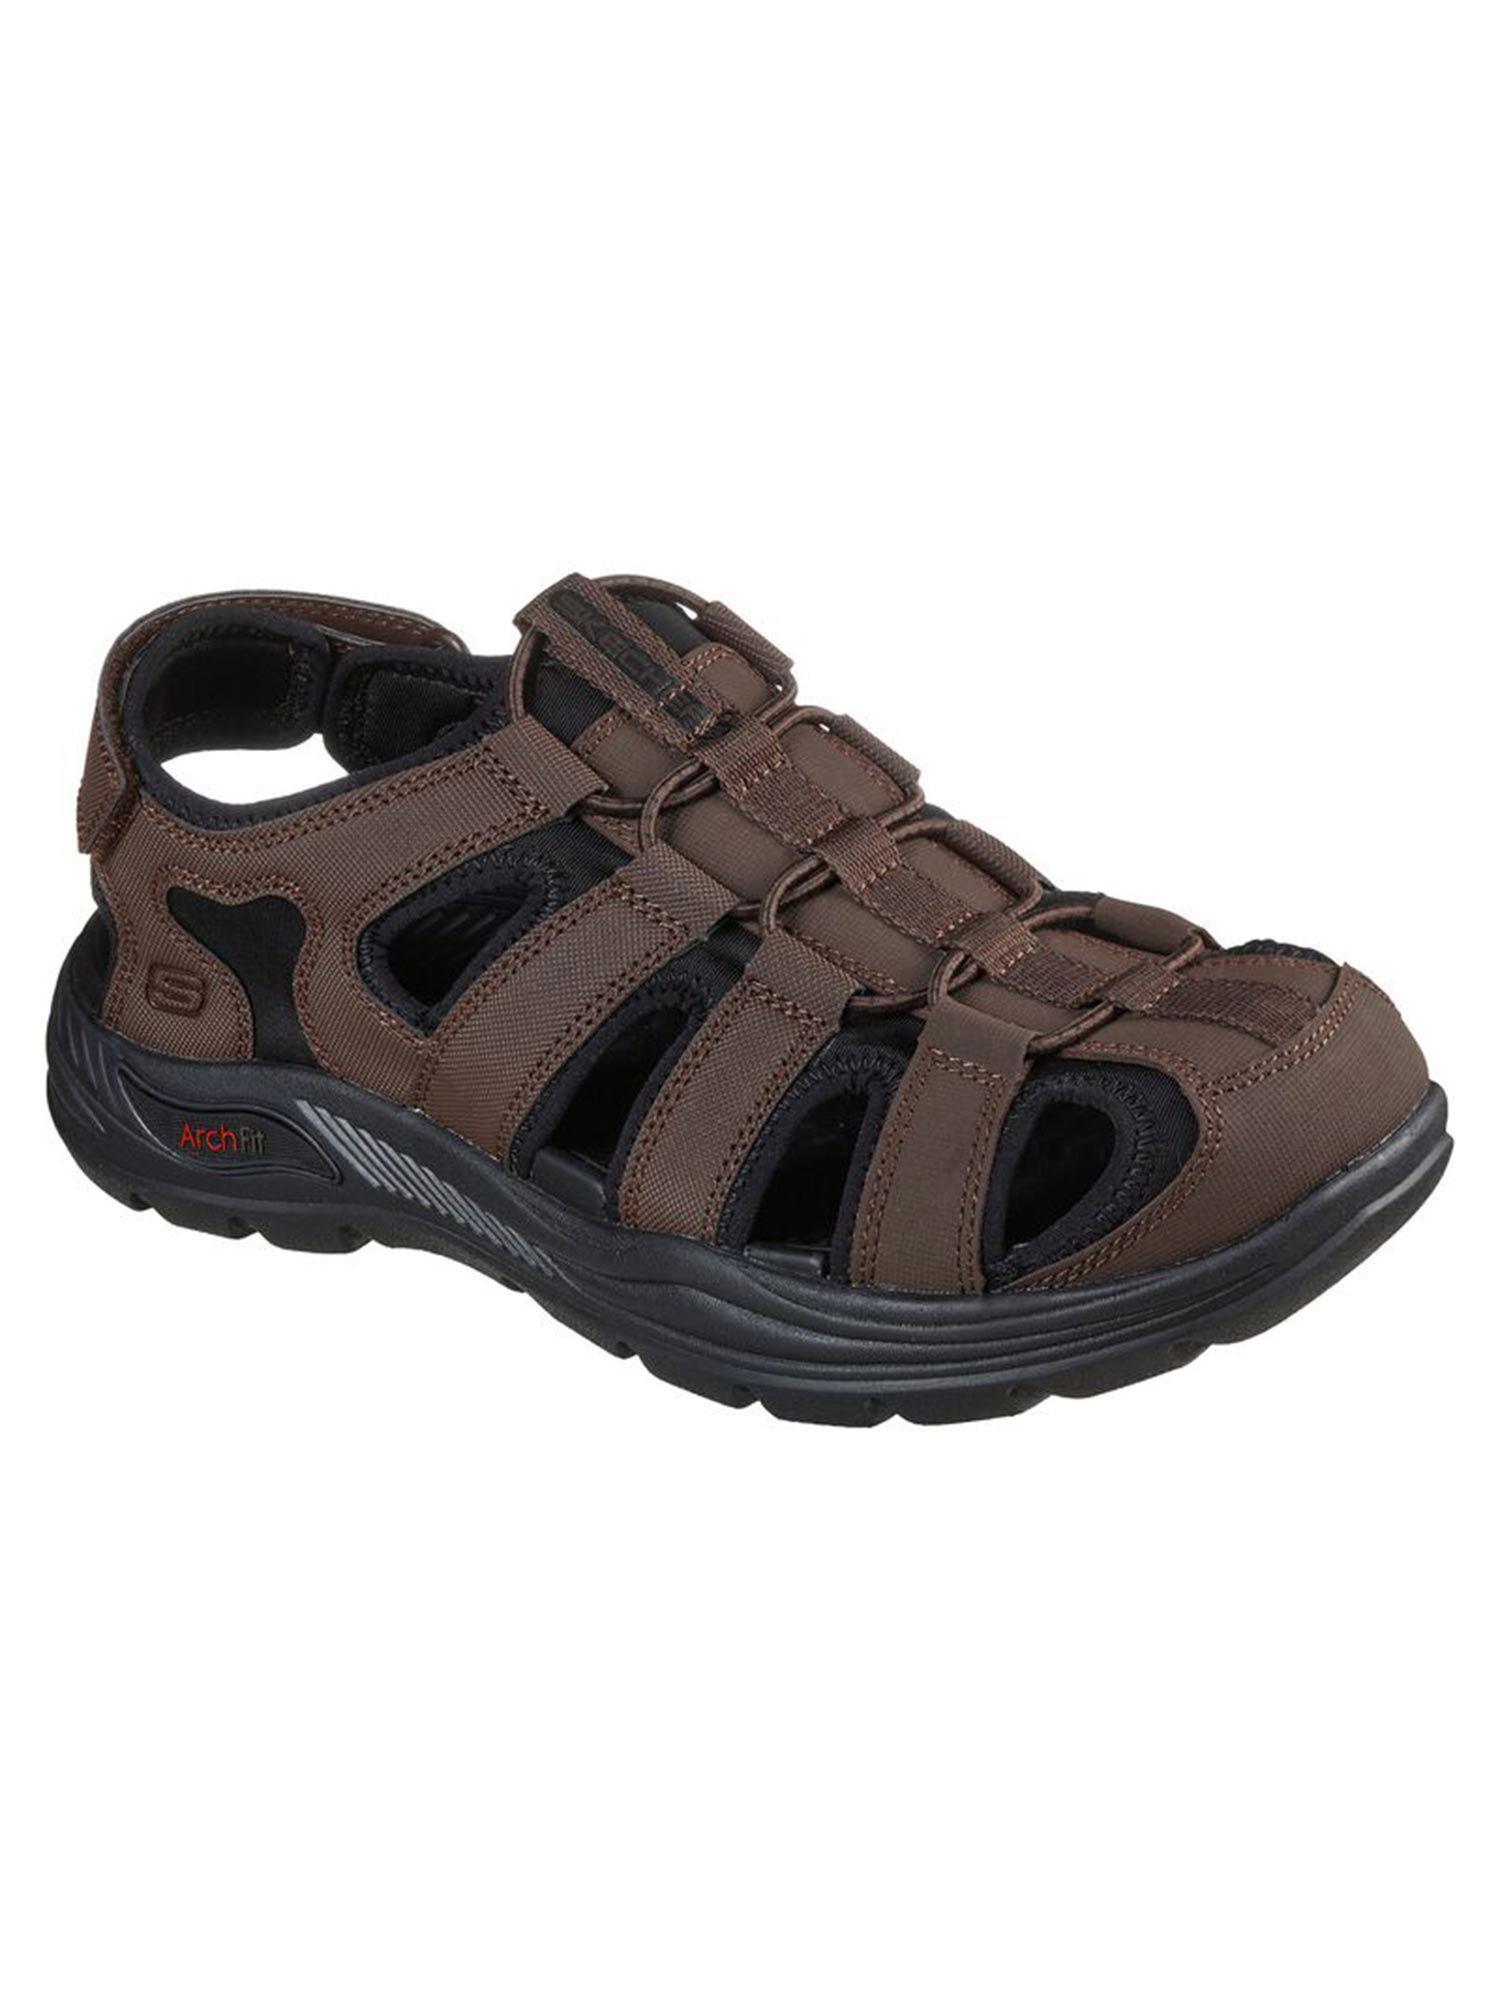 arch-fit-motley-sd-verlander-brown-arch-fit-sandals